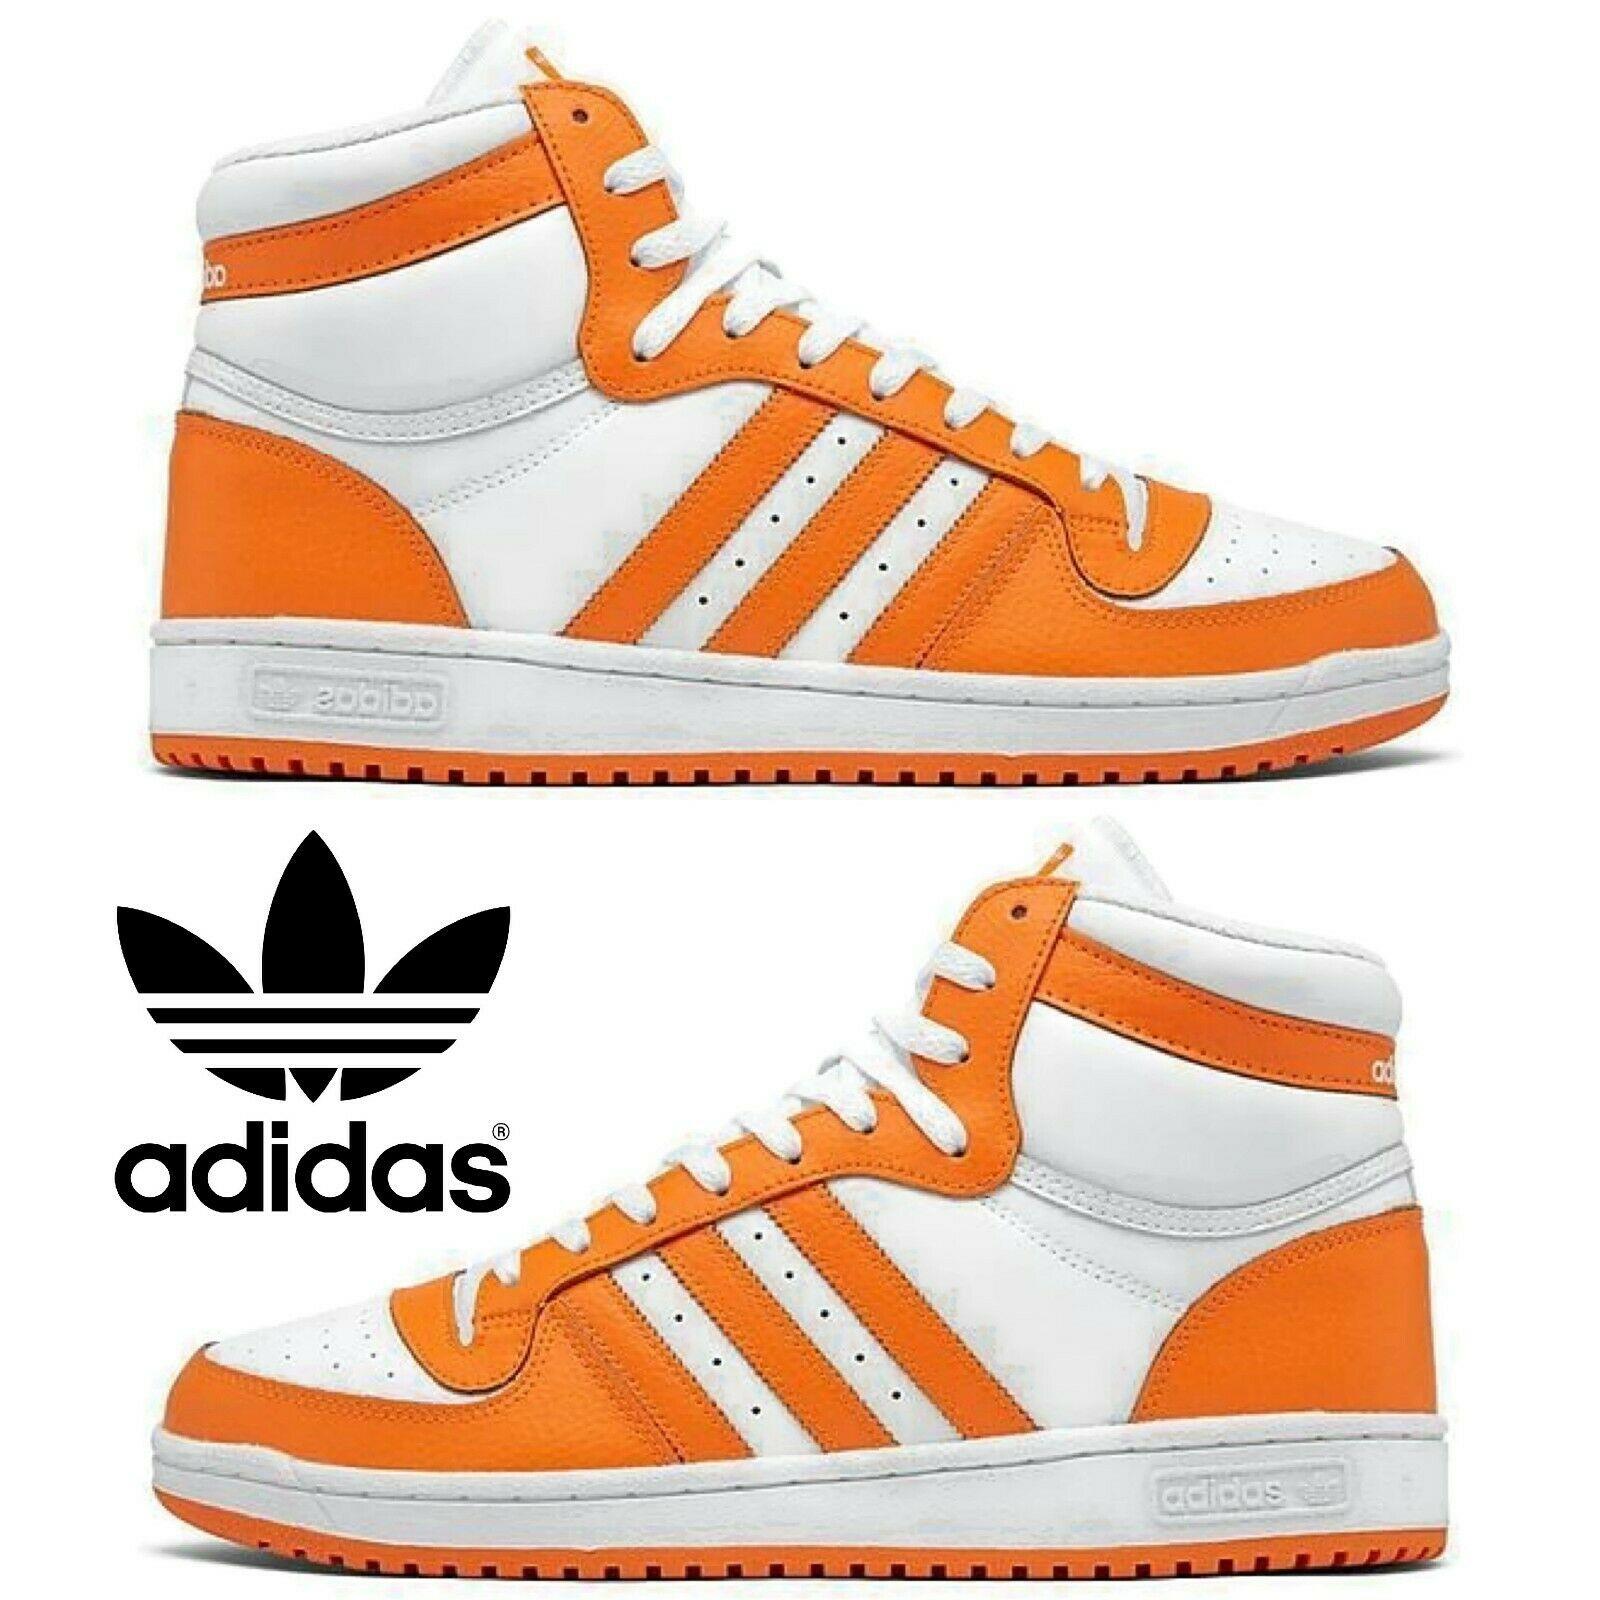 Adidas Originals Top Ten Hi Men`s Sneakers Comfort Casual Shoes White Orange